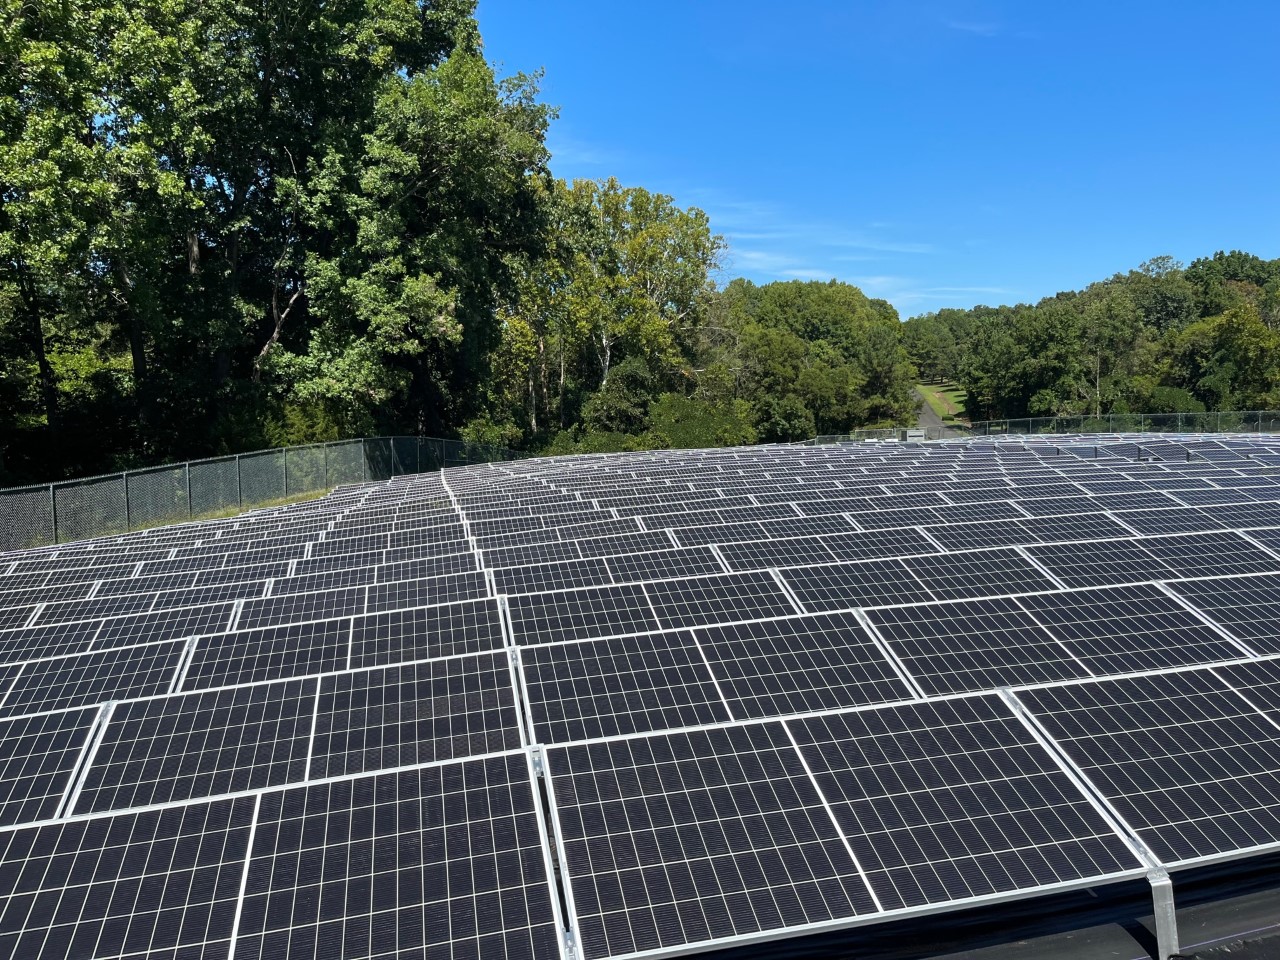 Solar panels at Cane Creek Reservoir.